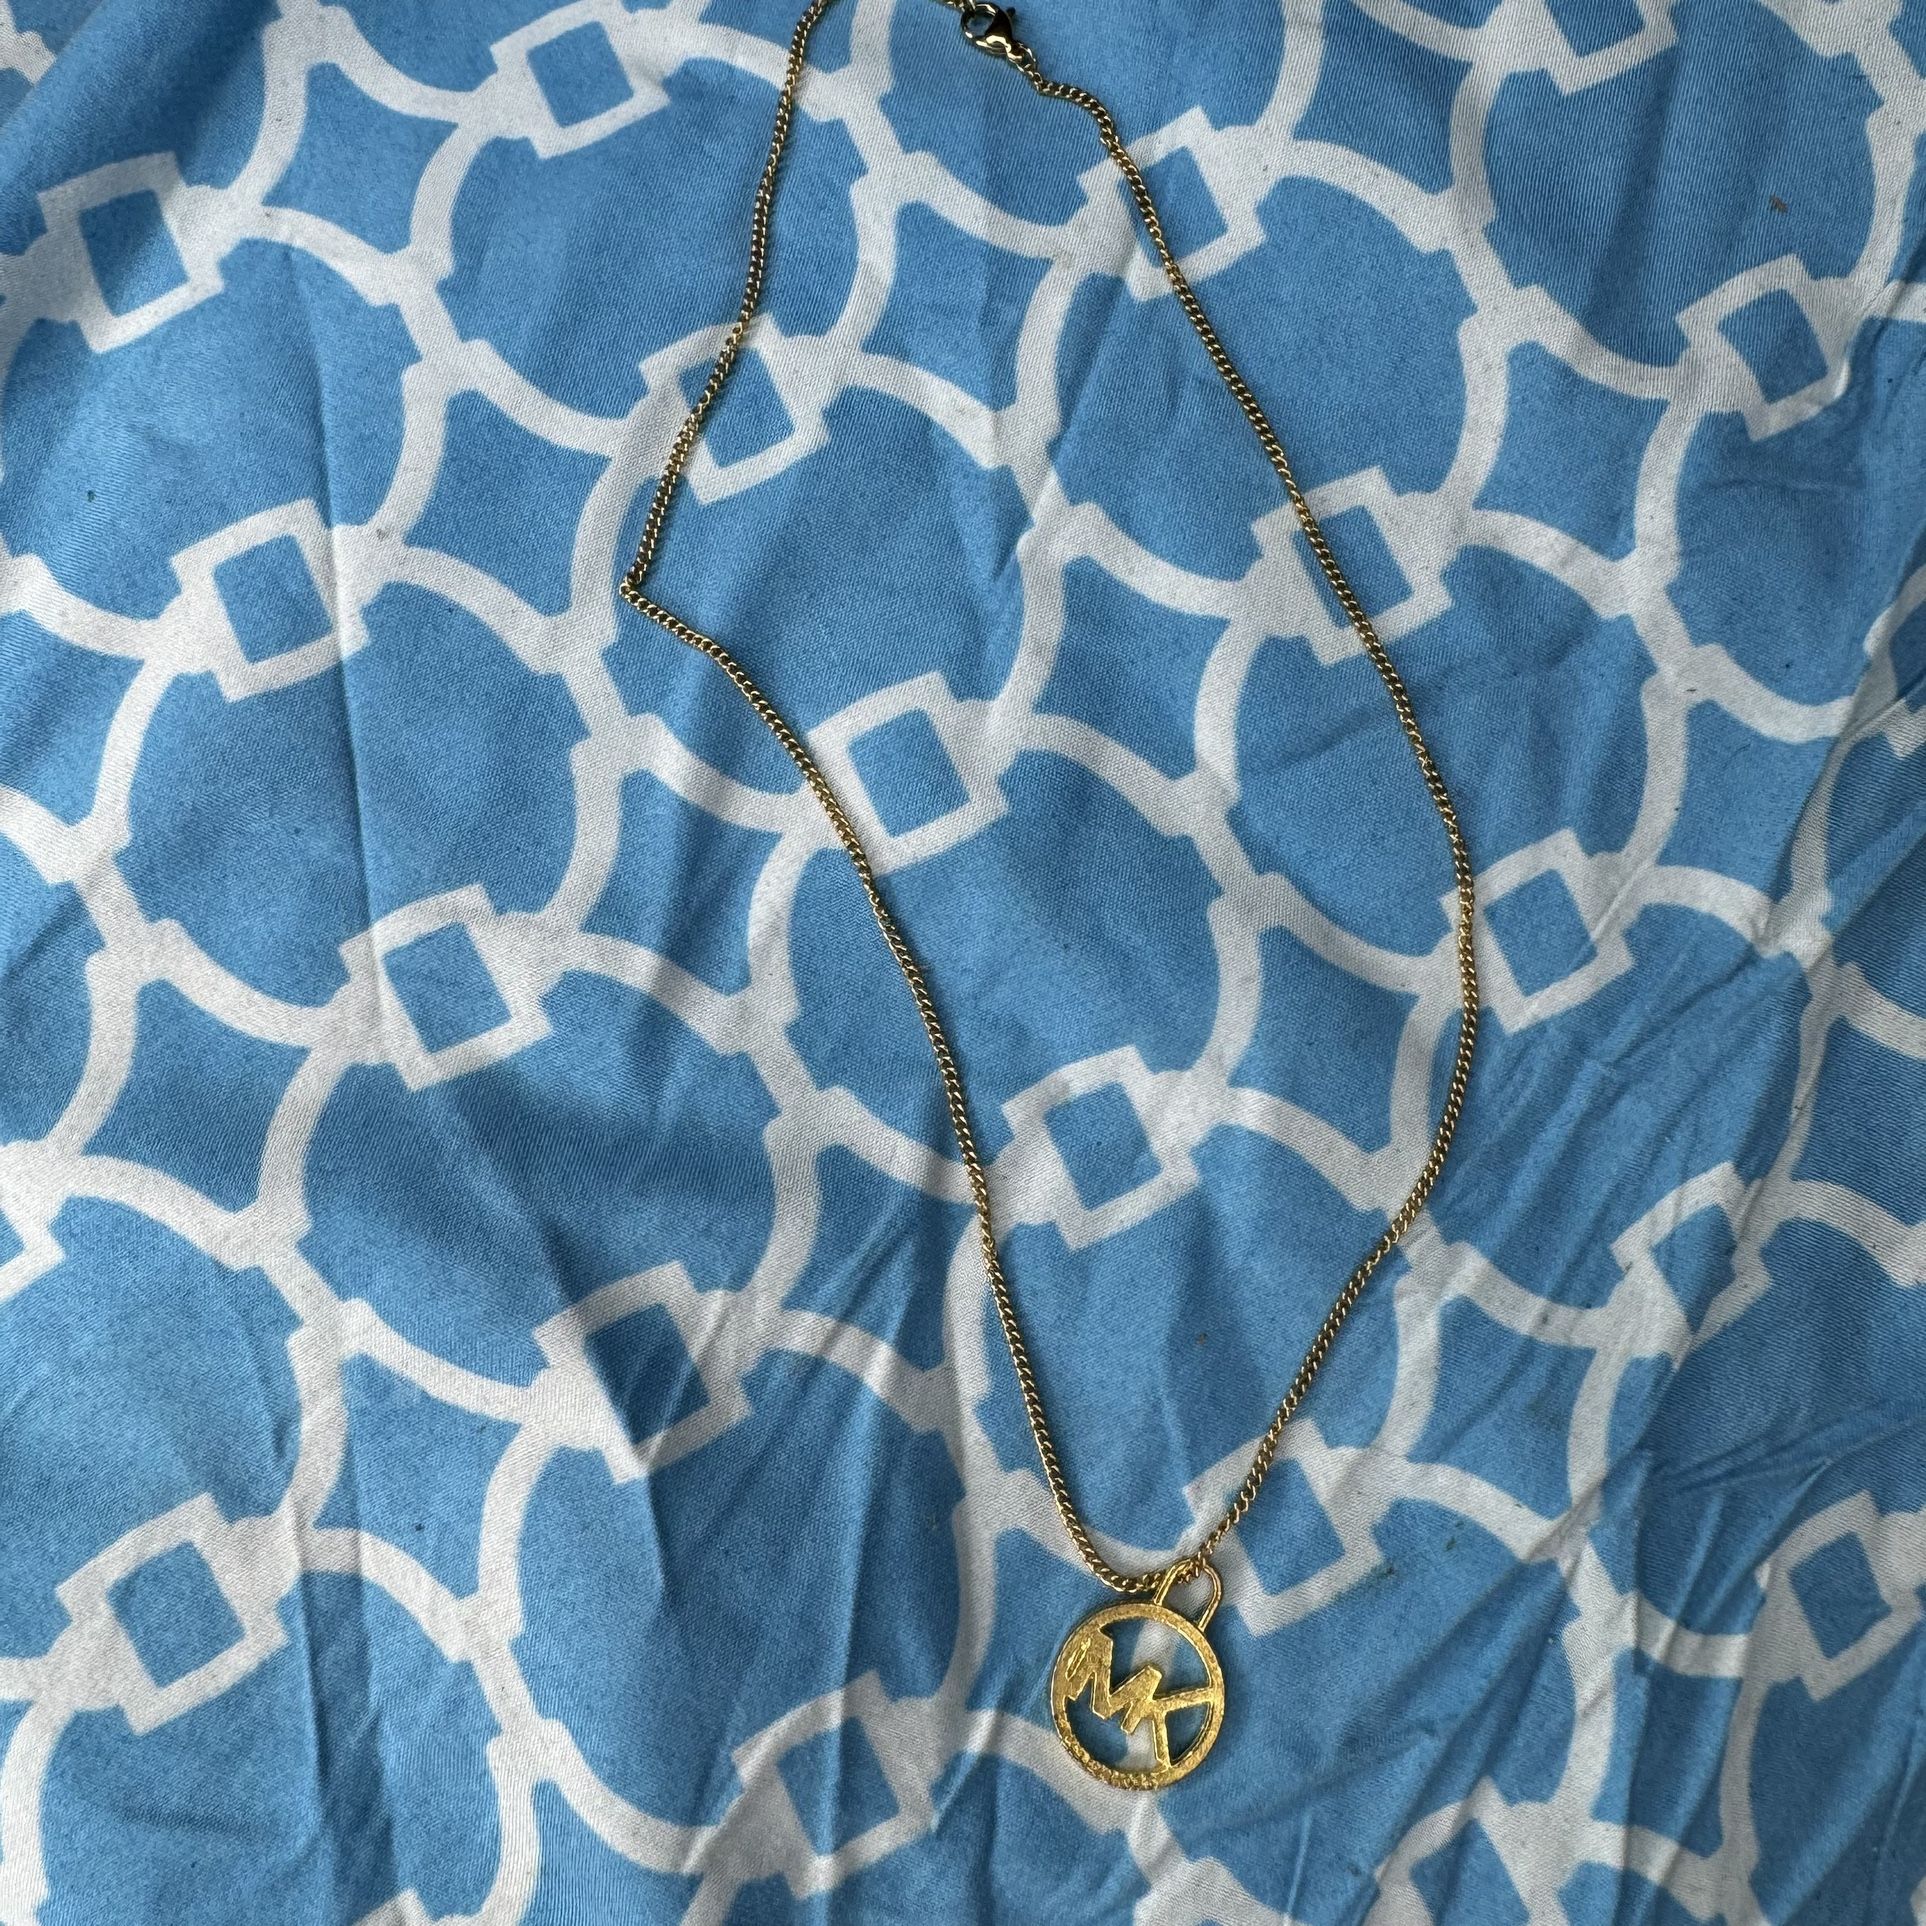 Michael kors chain necklace pendant gold MK logo unisex vintage rare unisex rope